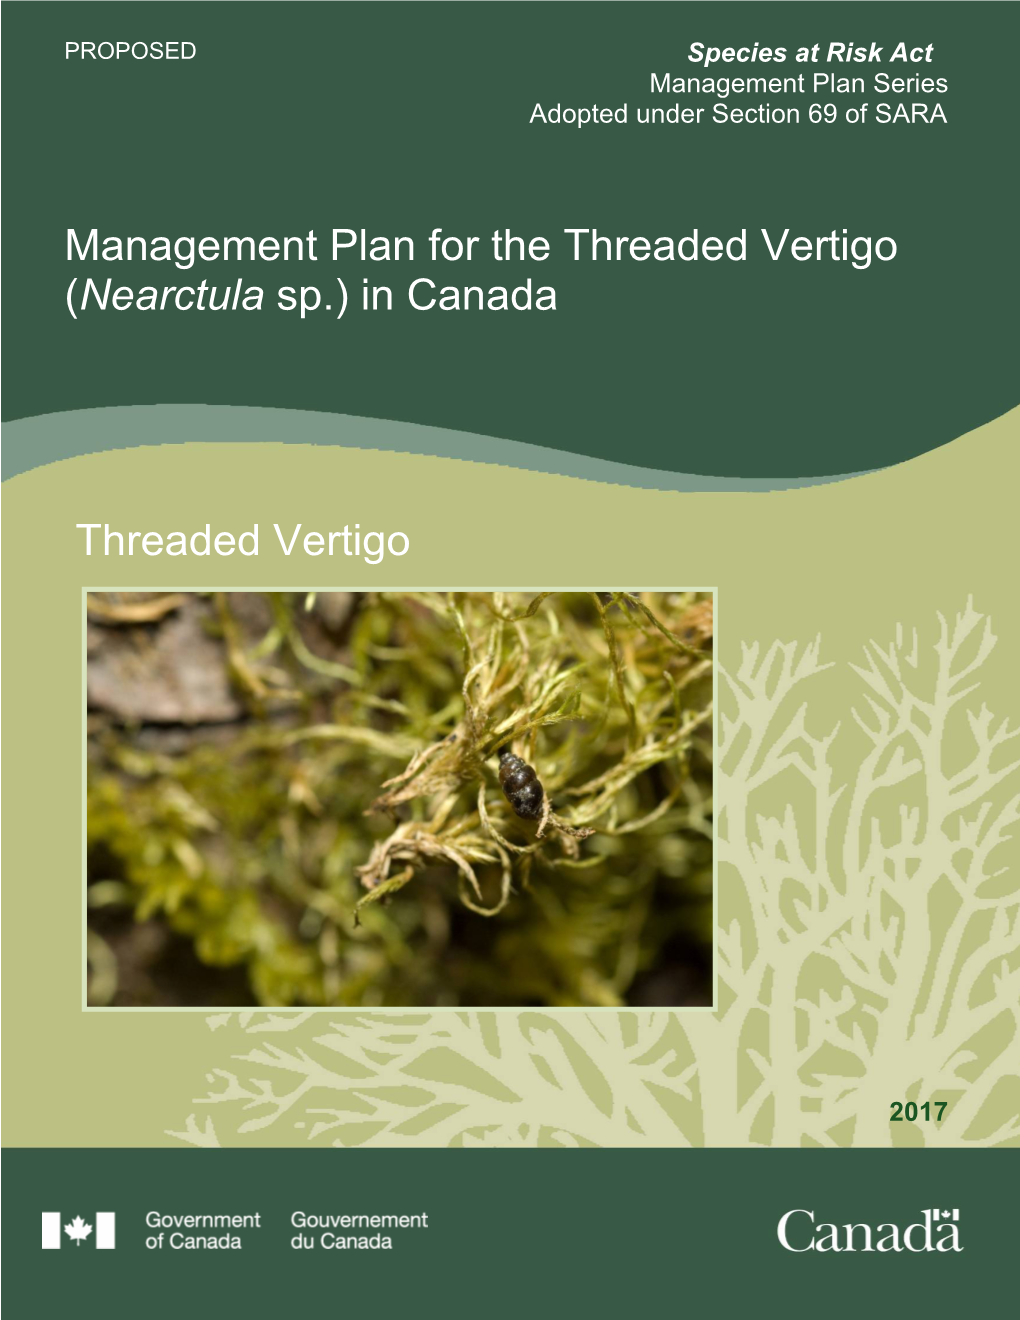 Management Plan for the Threaded Vertigo (Nearctula Sp.) in Canada